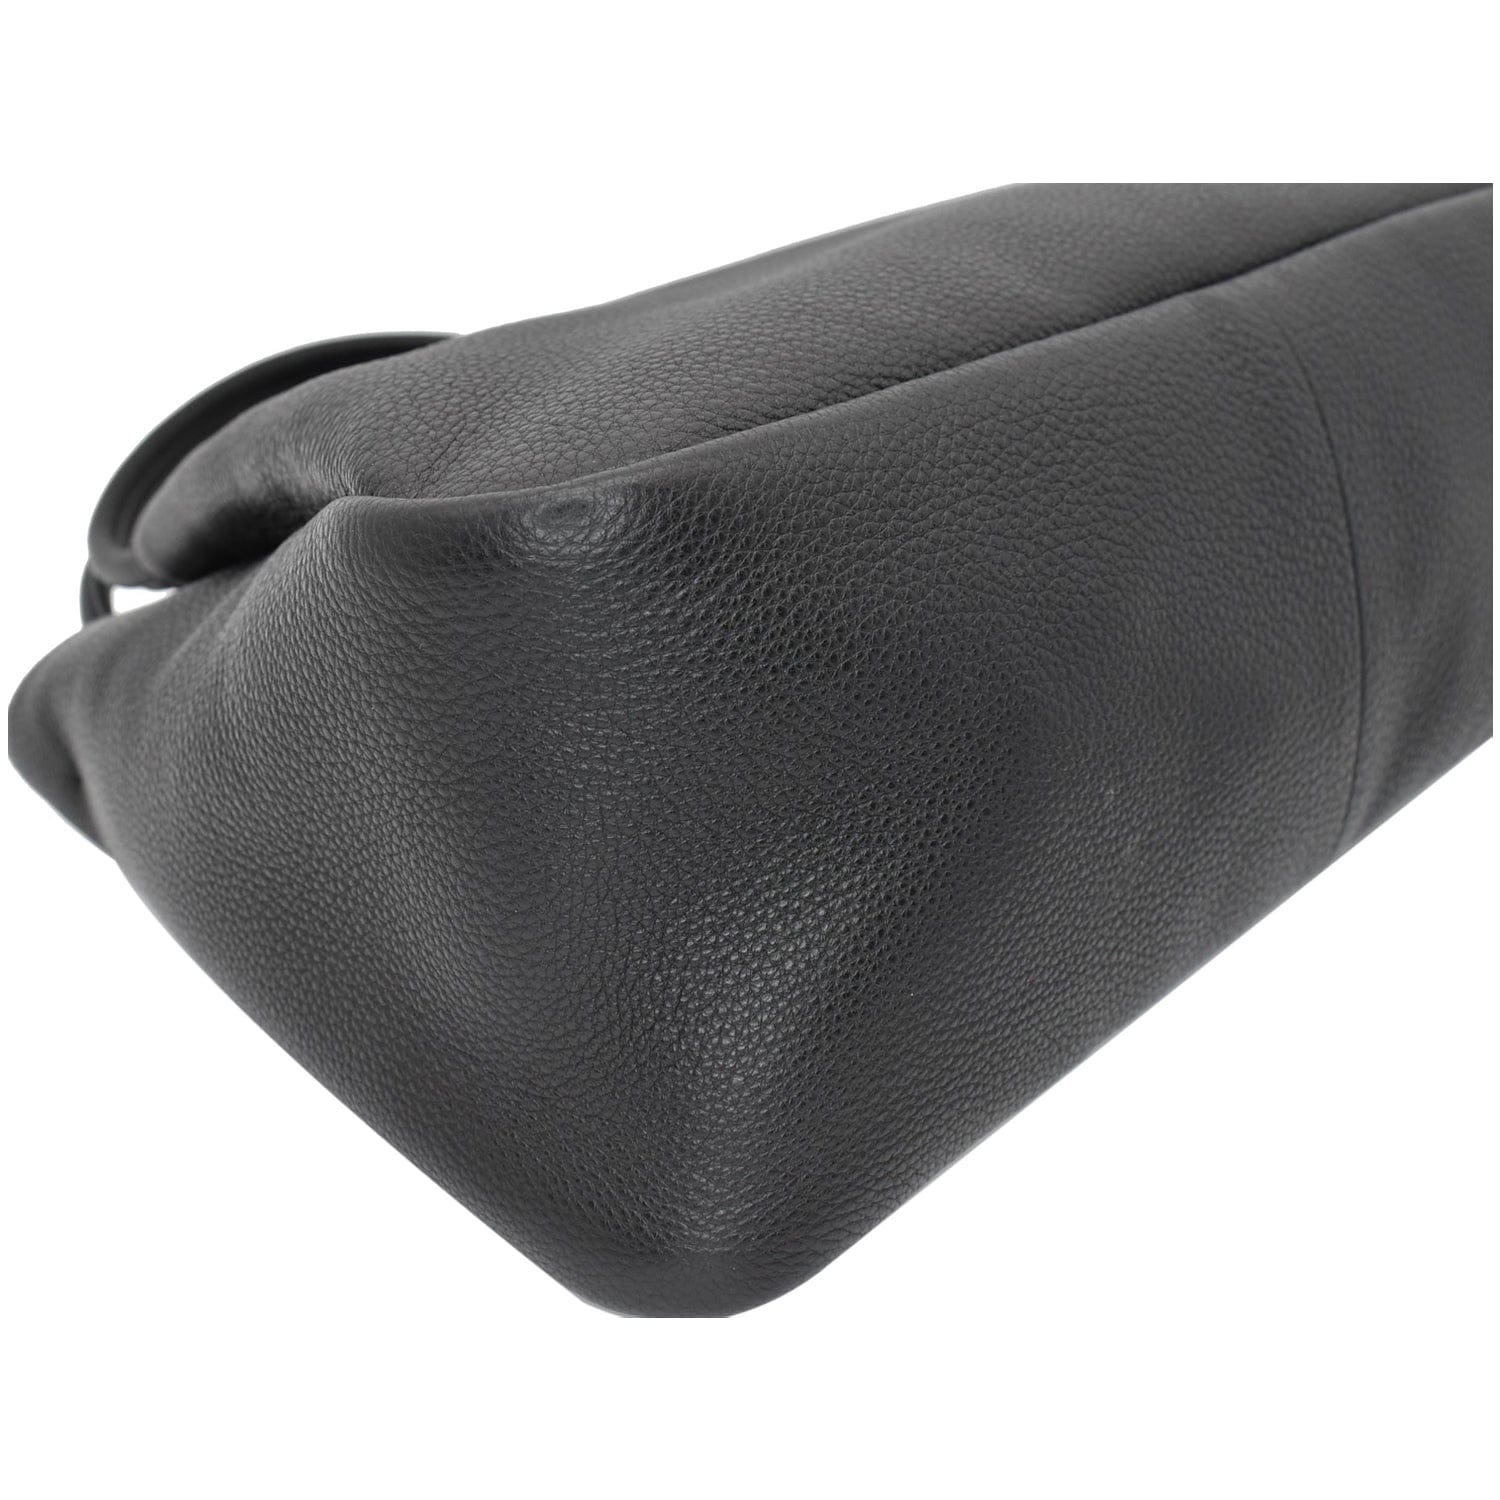 PRADA Flou Leather Shoulder Bag Grey